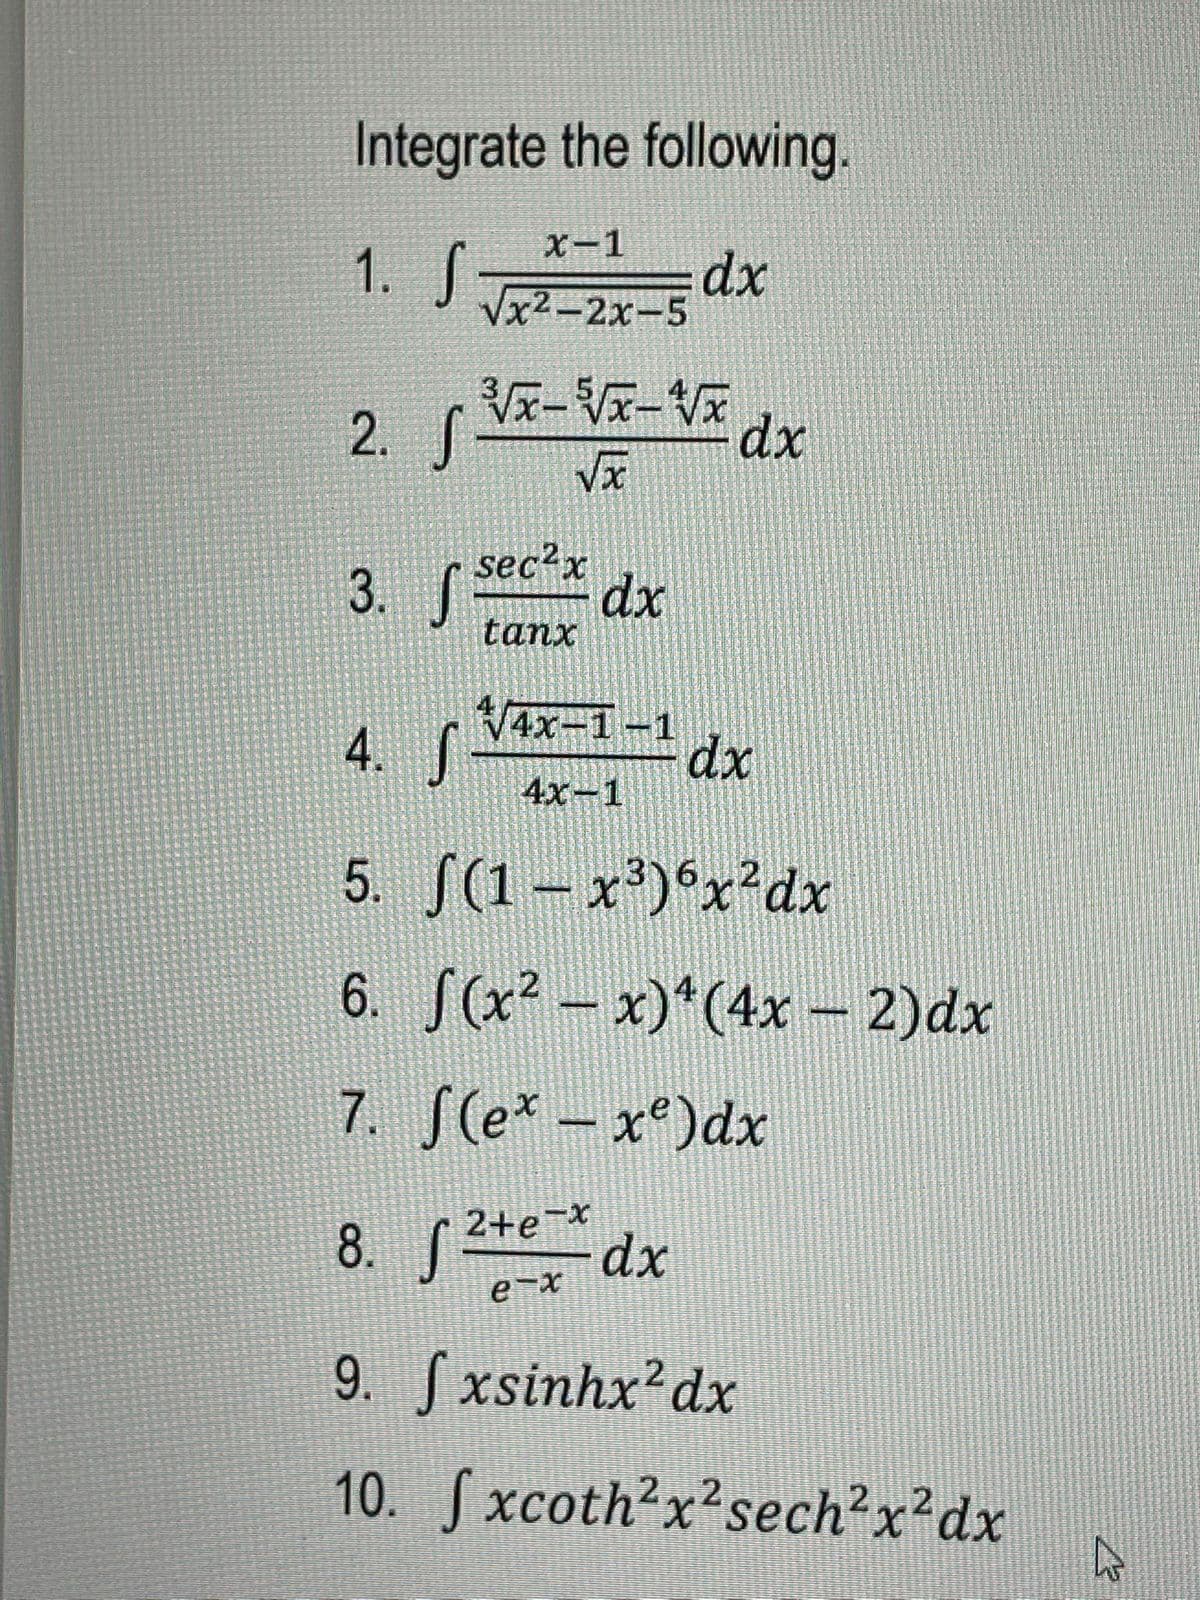 Integrate the following.
X-1
1. S
dx
Vx2-2x-5
2. x-V-V
dx
sec2x
3. dx
tanx
4. f
4x-1-1
dx
4x-1
5. S(1 – x')°x²dx
6. S(x² – x)*(4x – 2)dx
7. S(e* – x°)dx
2+e x
8. dx
e-x
9. Sxsinhx dx
10. Sxcoth?x²sech?x?dx
